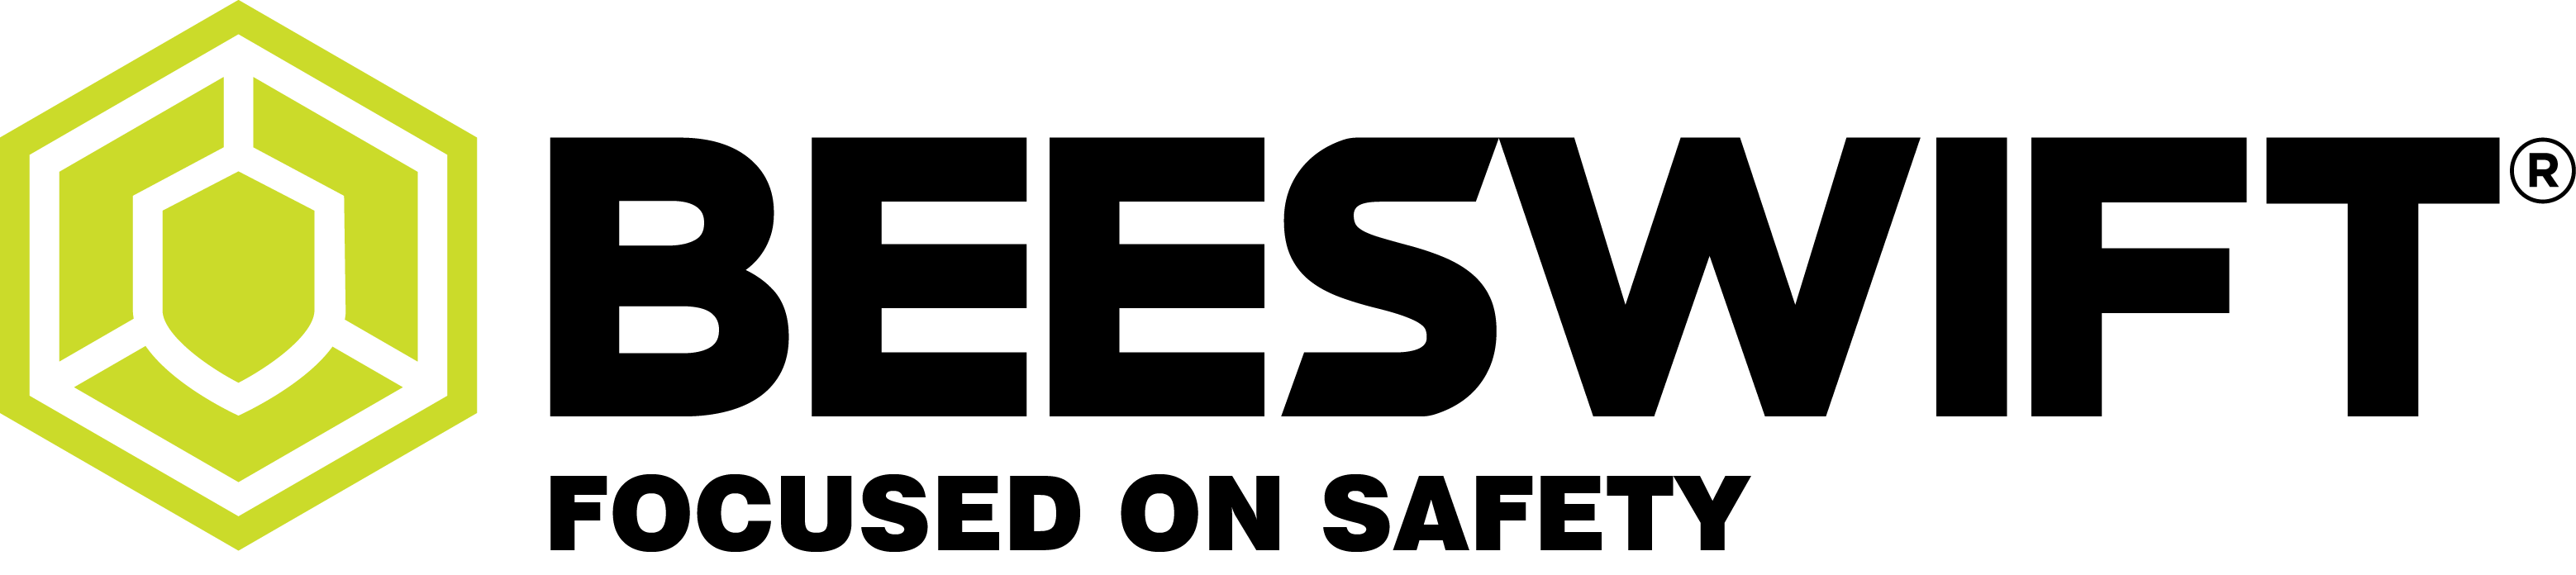 Beeswift logo